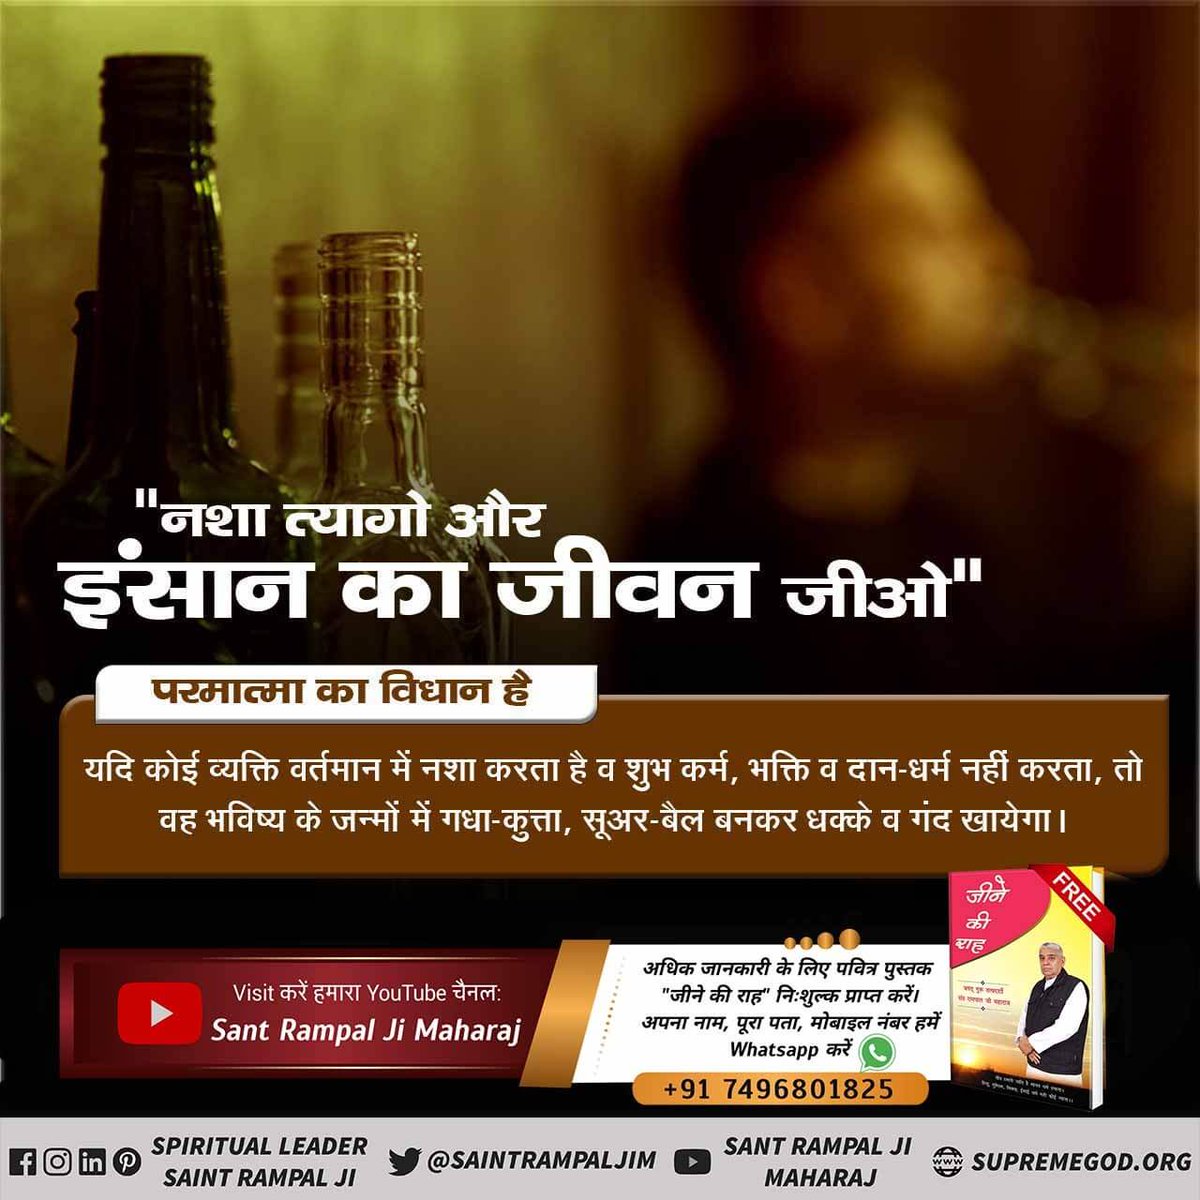 #alcoholism #addiction #recovery #sobriety #sober #alcoholic #mentalhealth #soberlife #नशा_एकअभिशापहै_कैसे_मुक्तिहो
#GodMorningThursday 
Sant Rampal Ji Maharaj